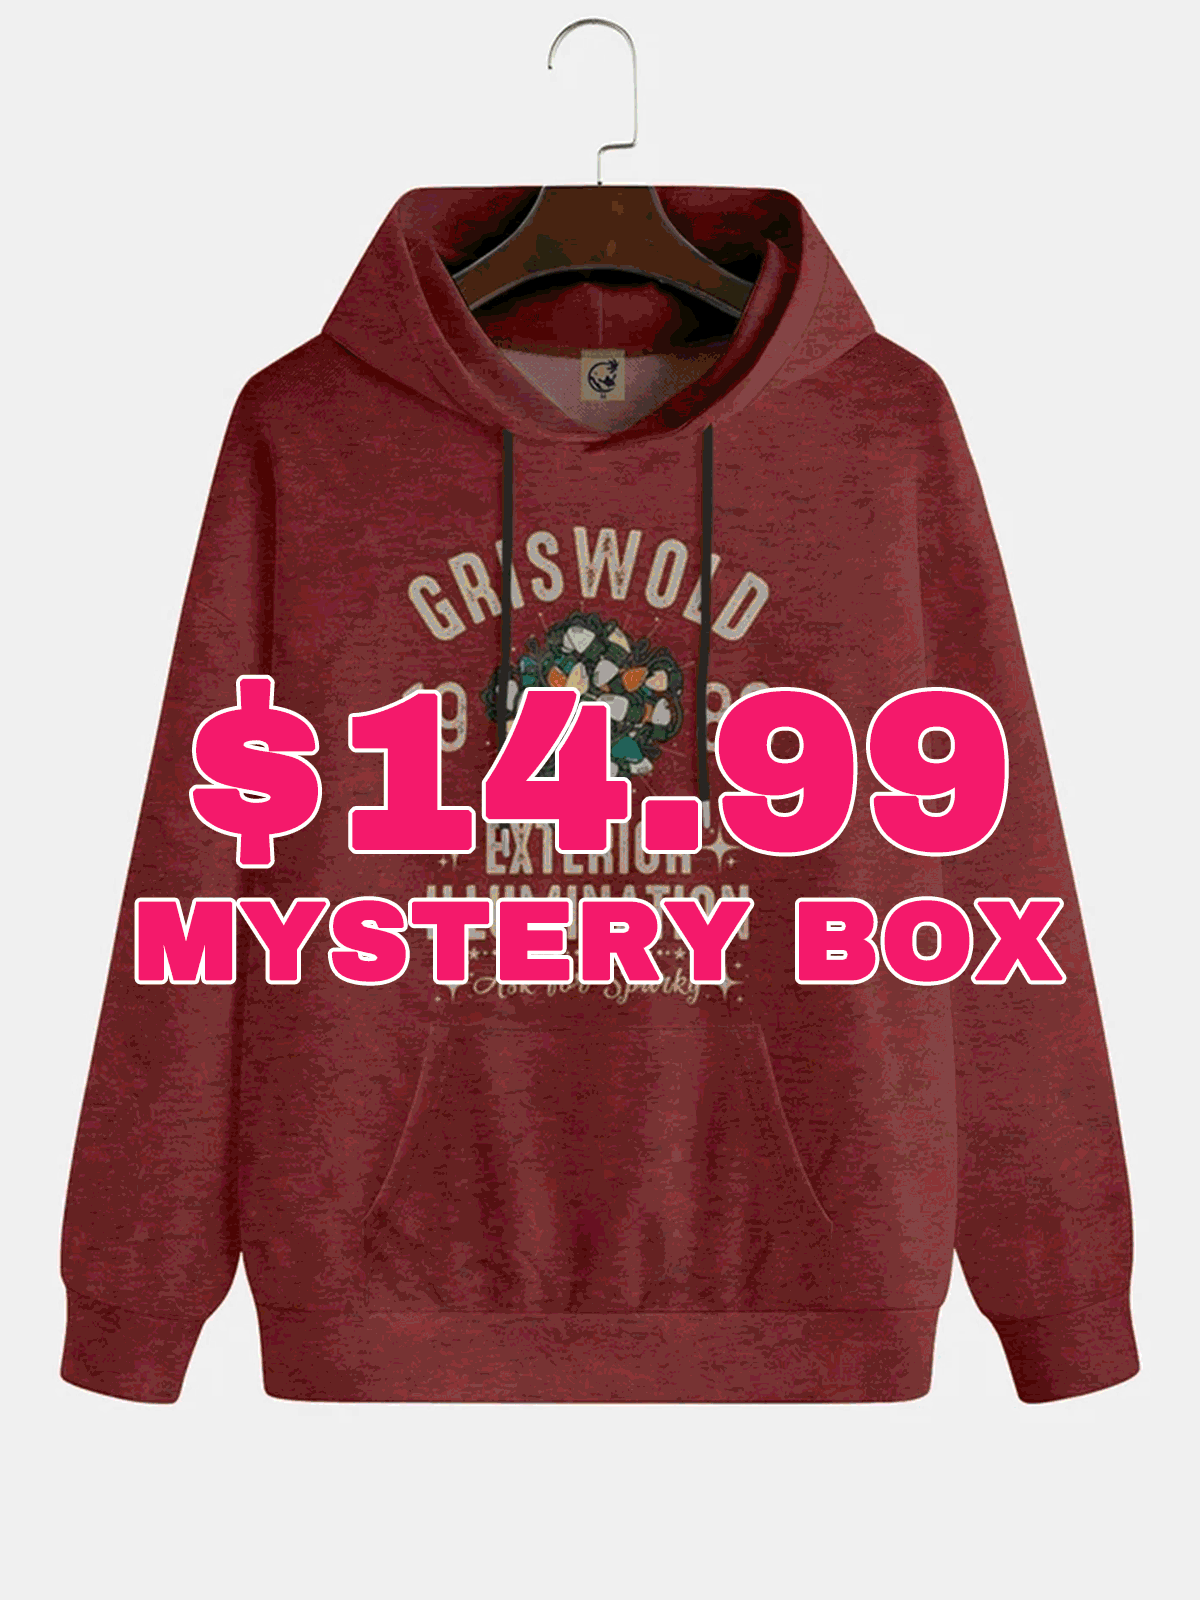 MYSTERY BOX $14.99